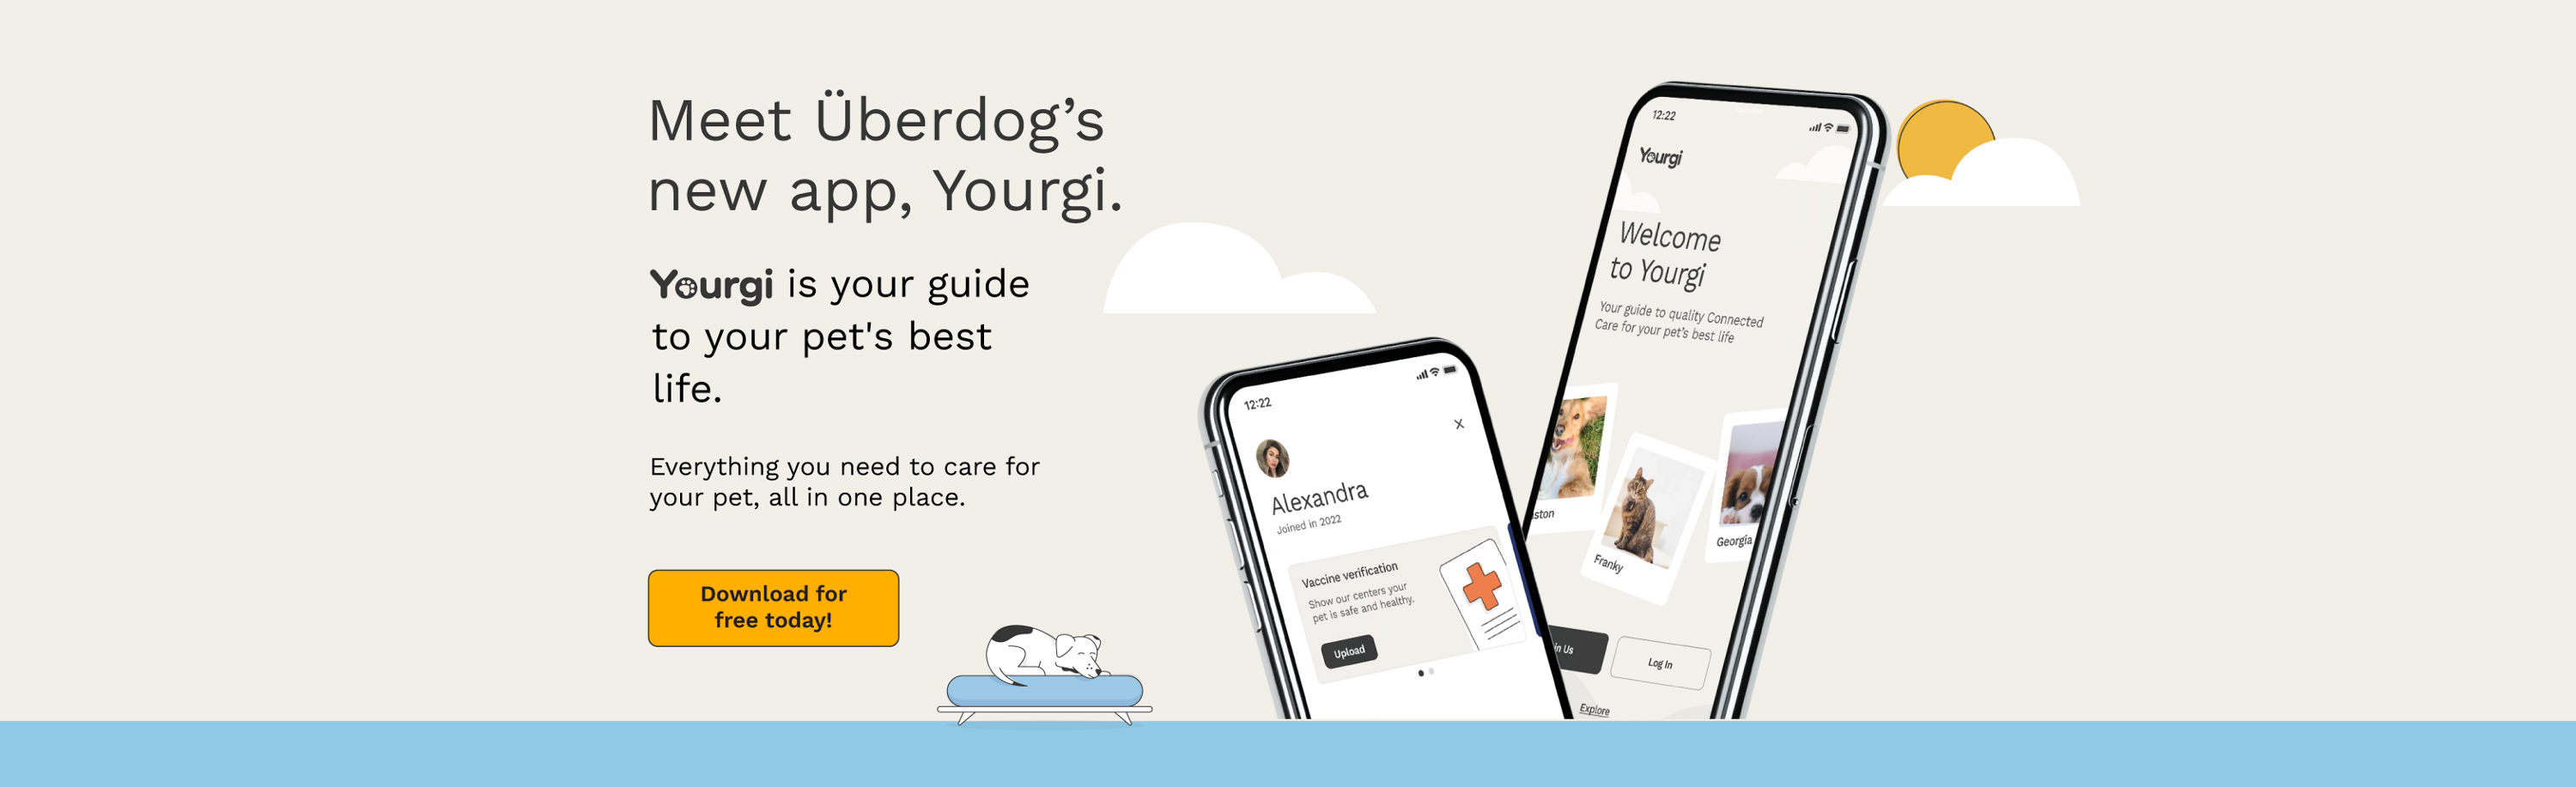 Meet Uberdog's new app, Yourgi.